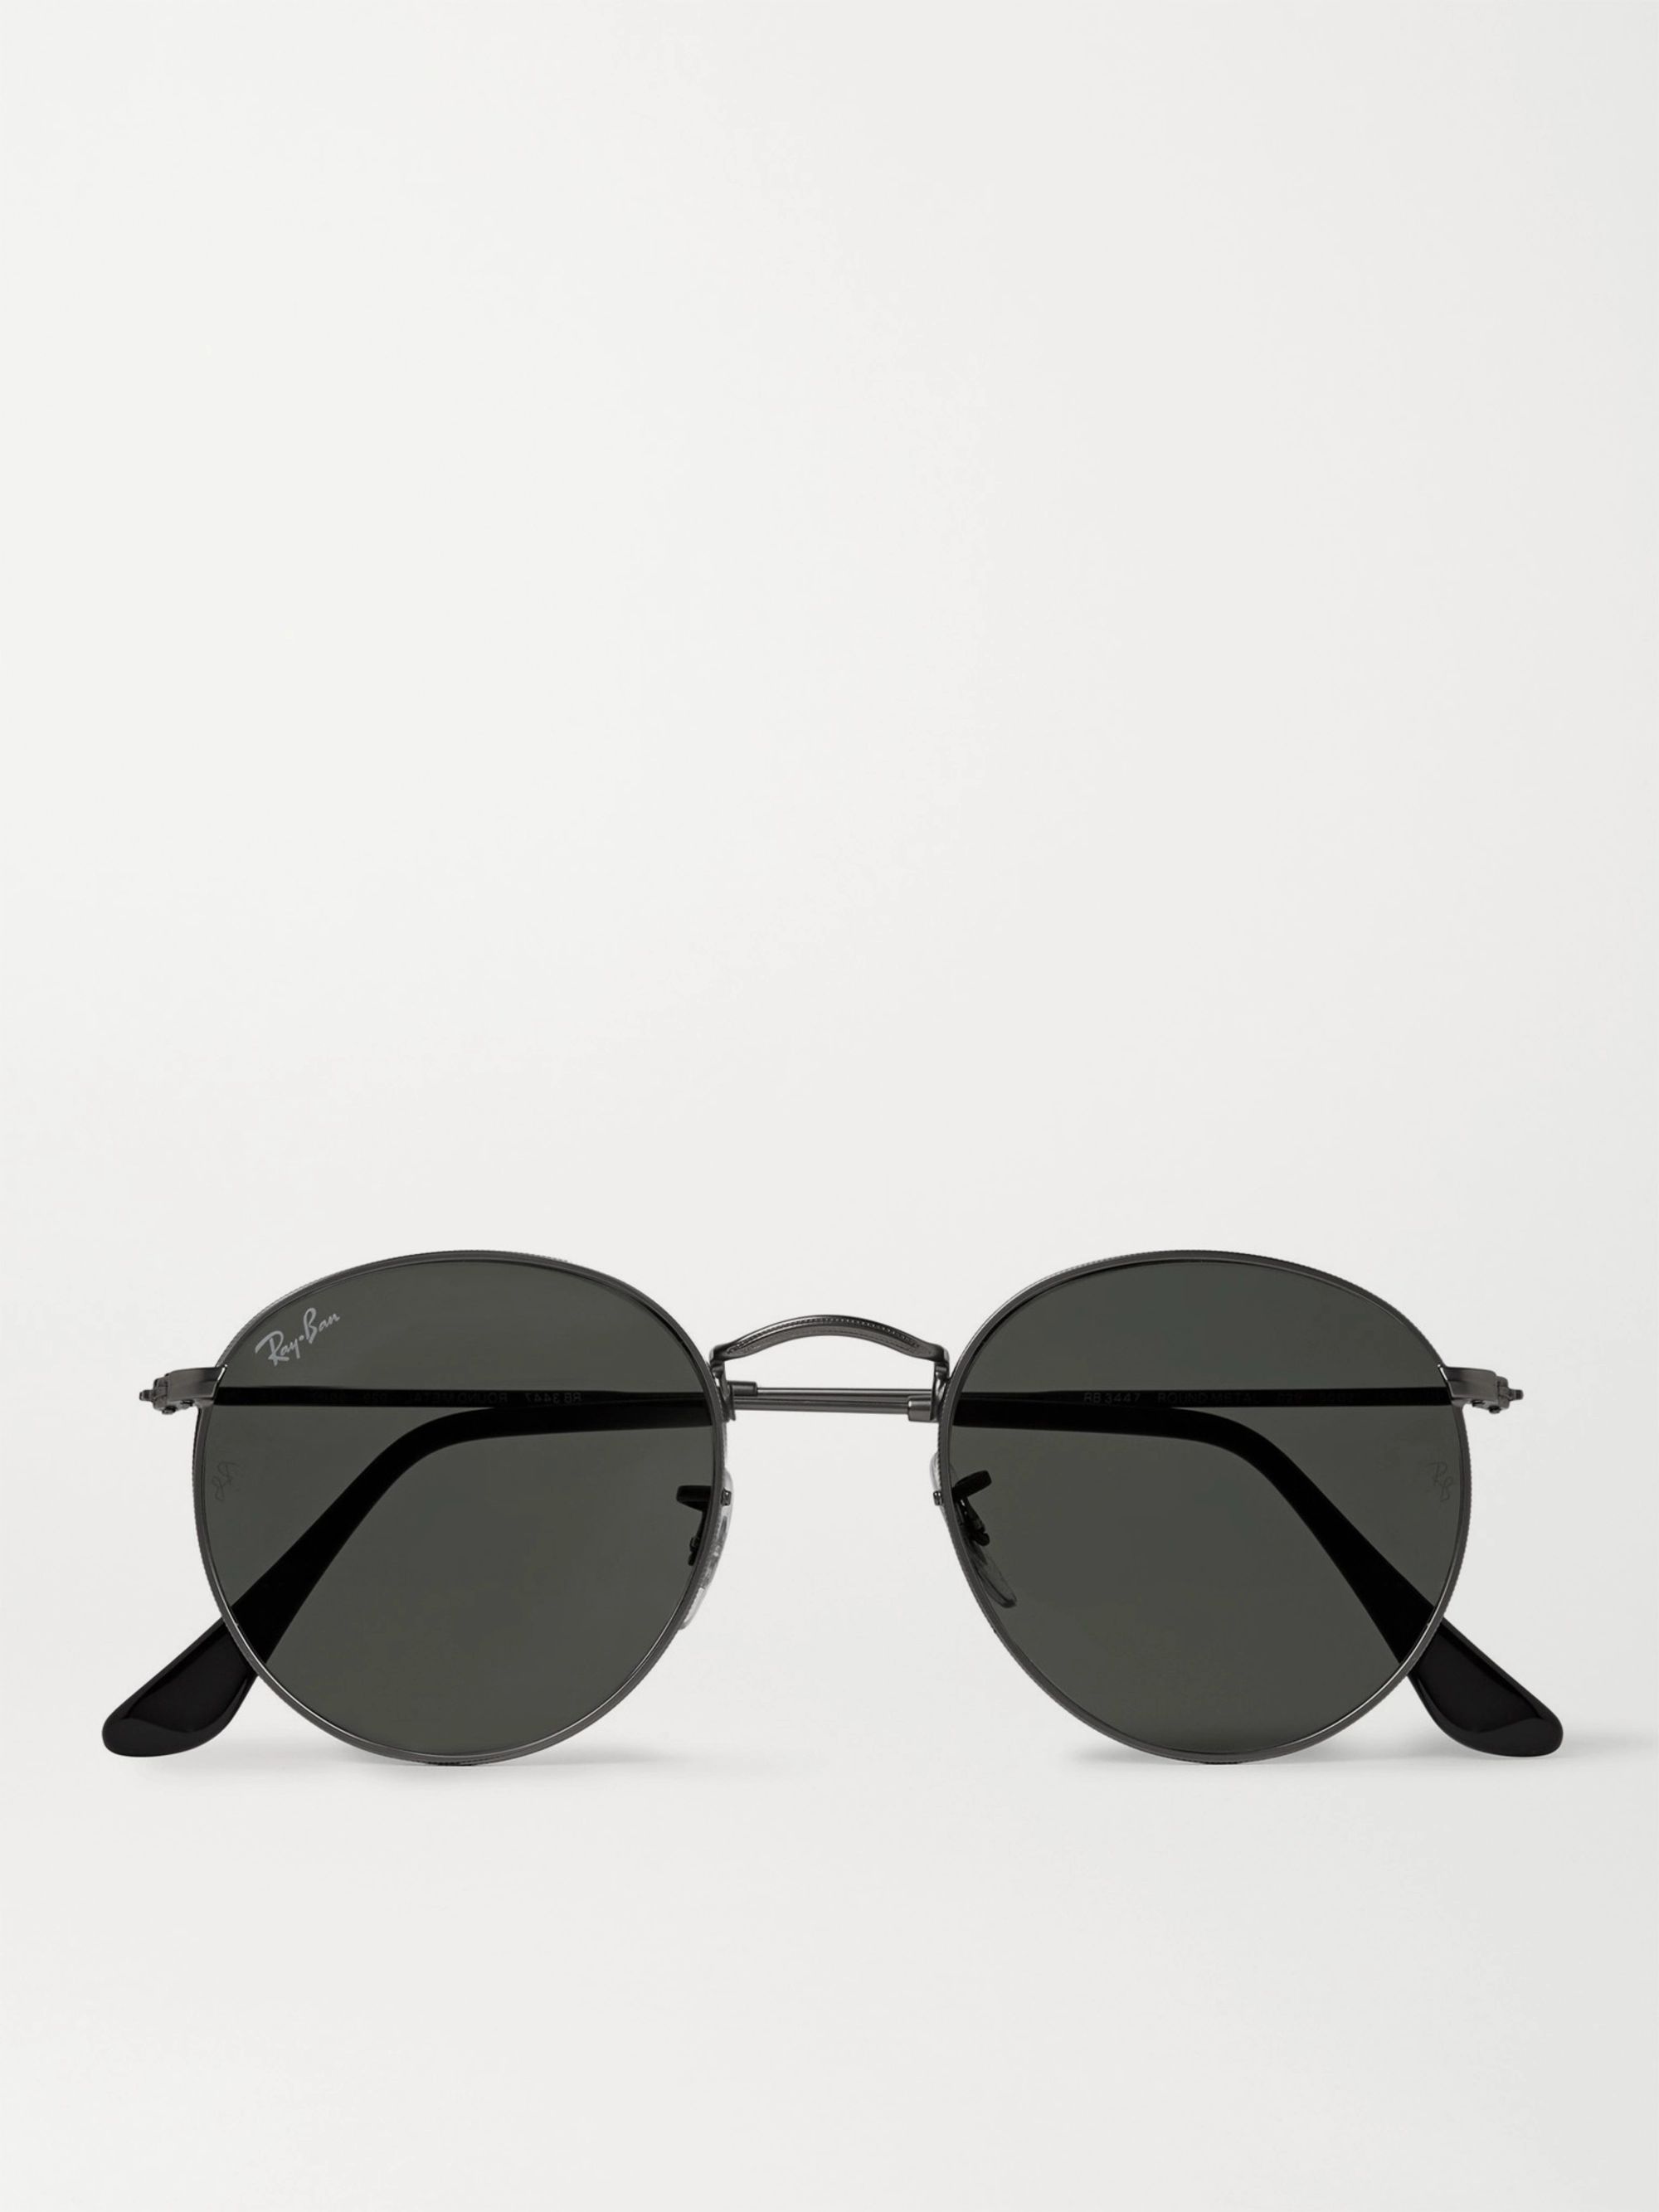 ray ban sunglasses round frame